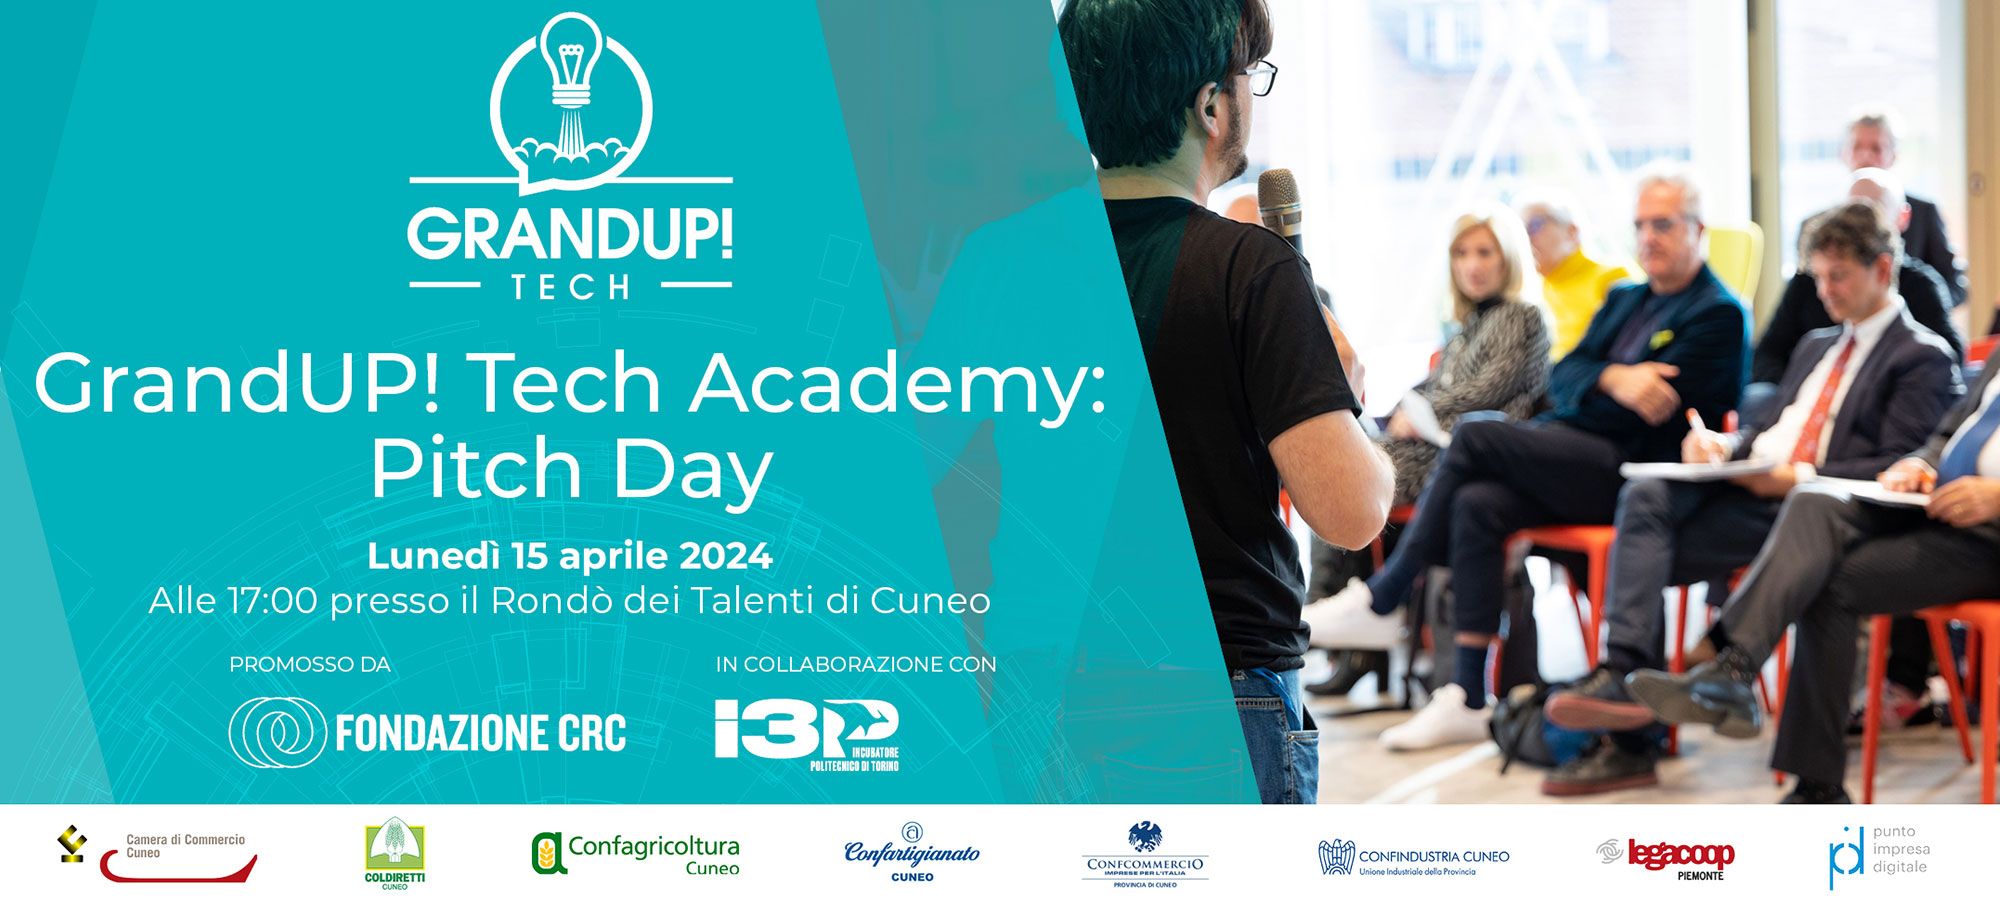 GrandUP! Tech Academy: Pitch Day 2024